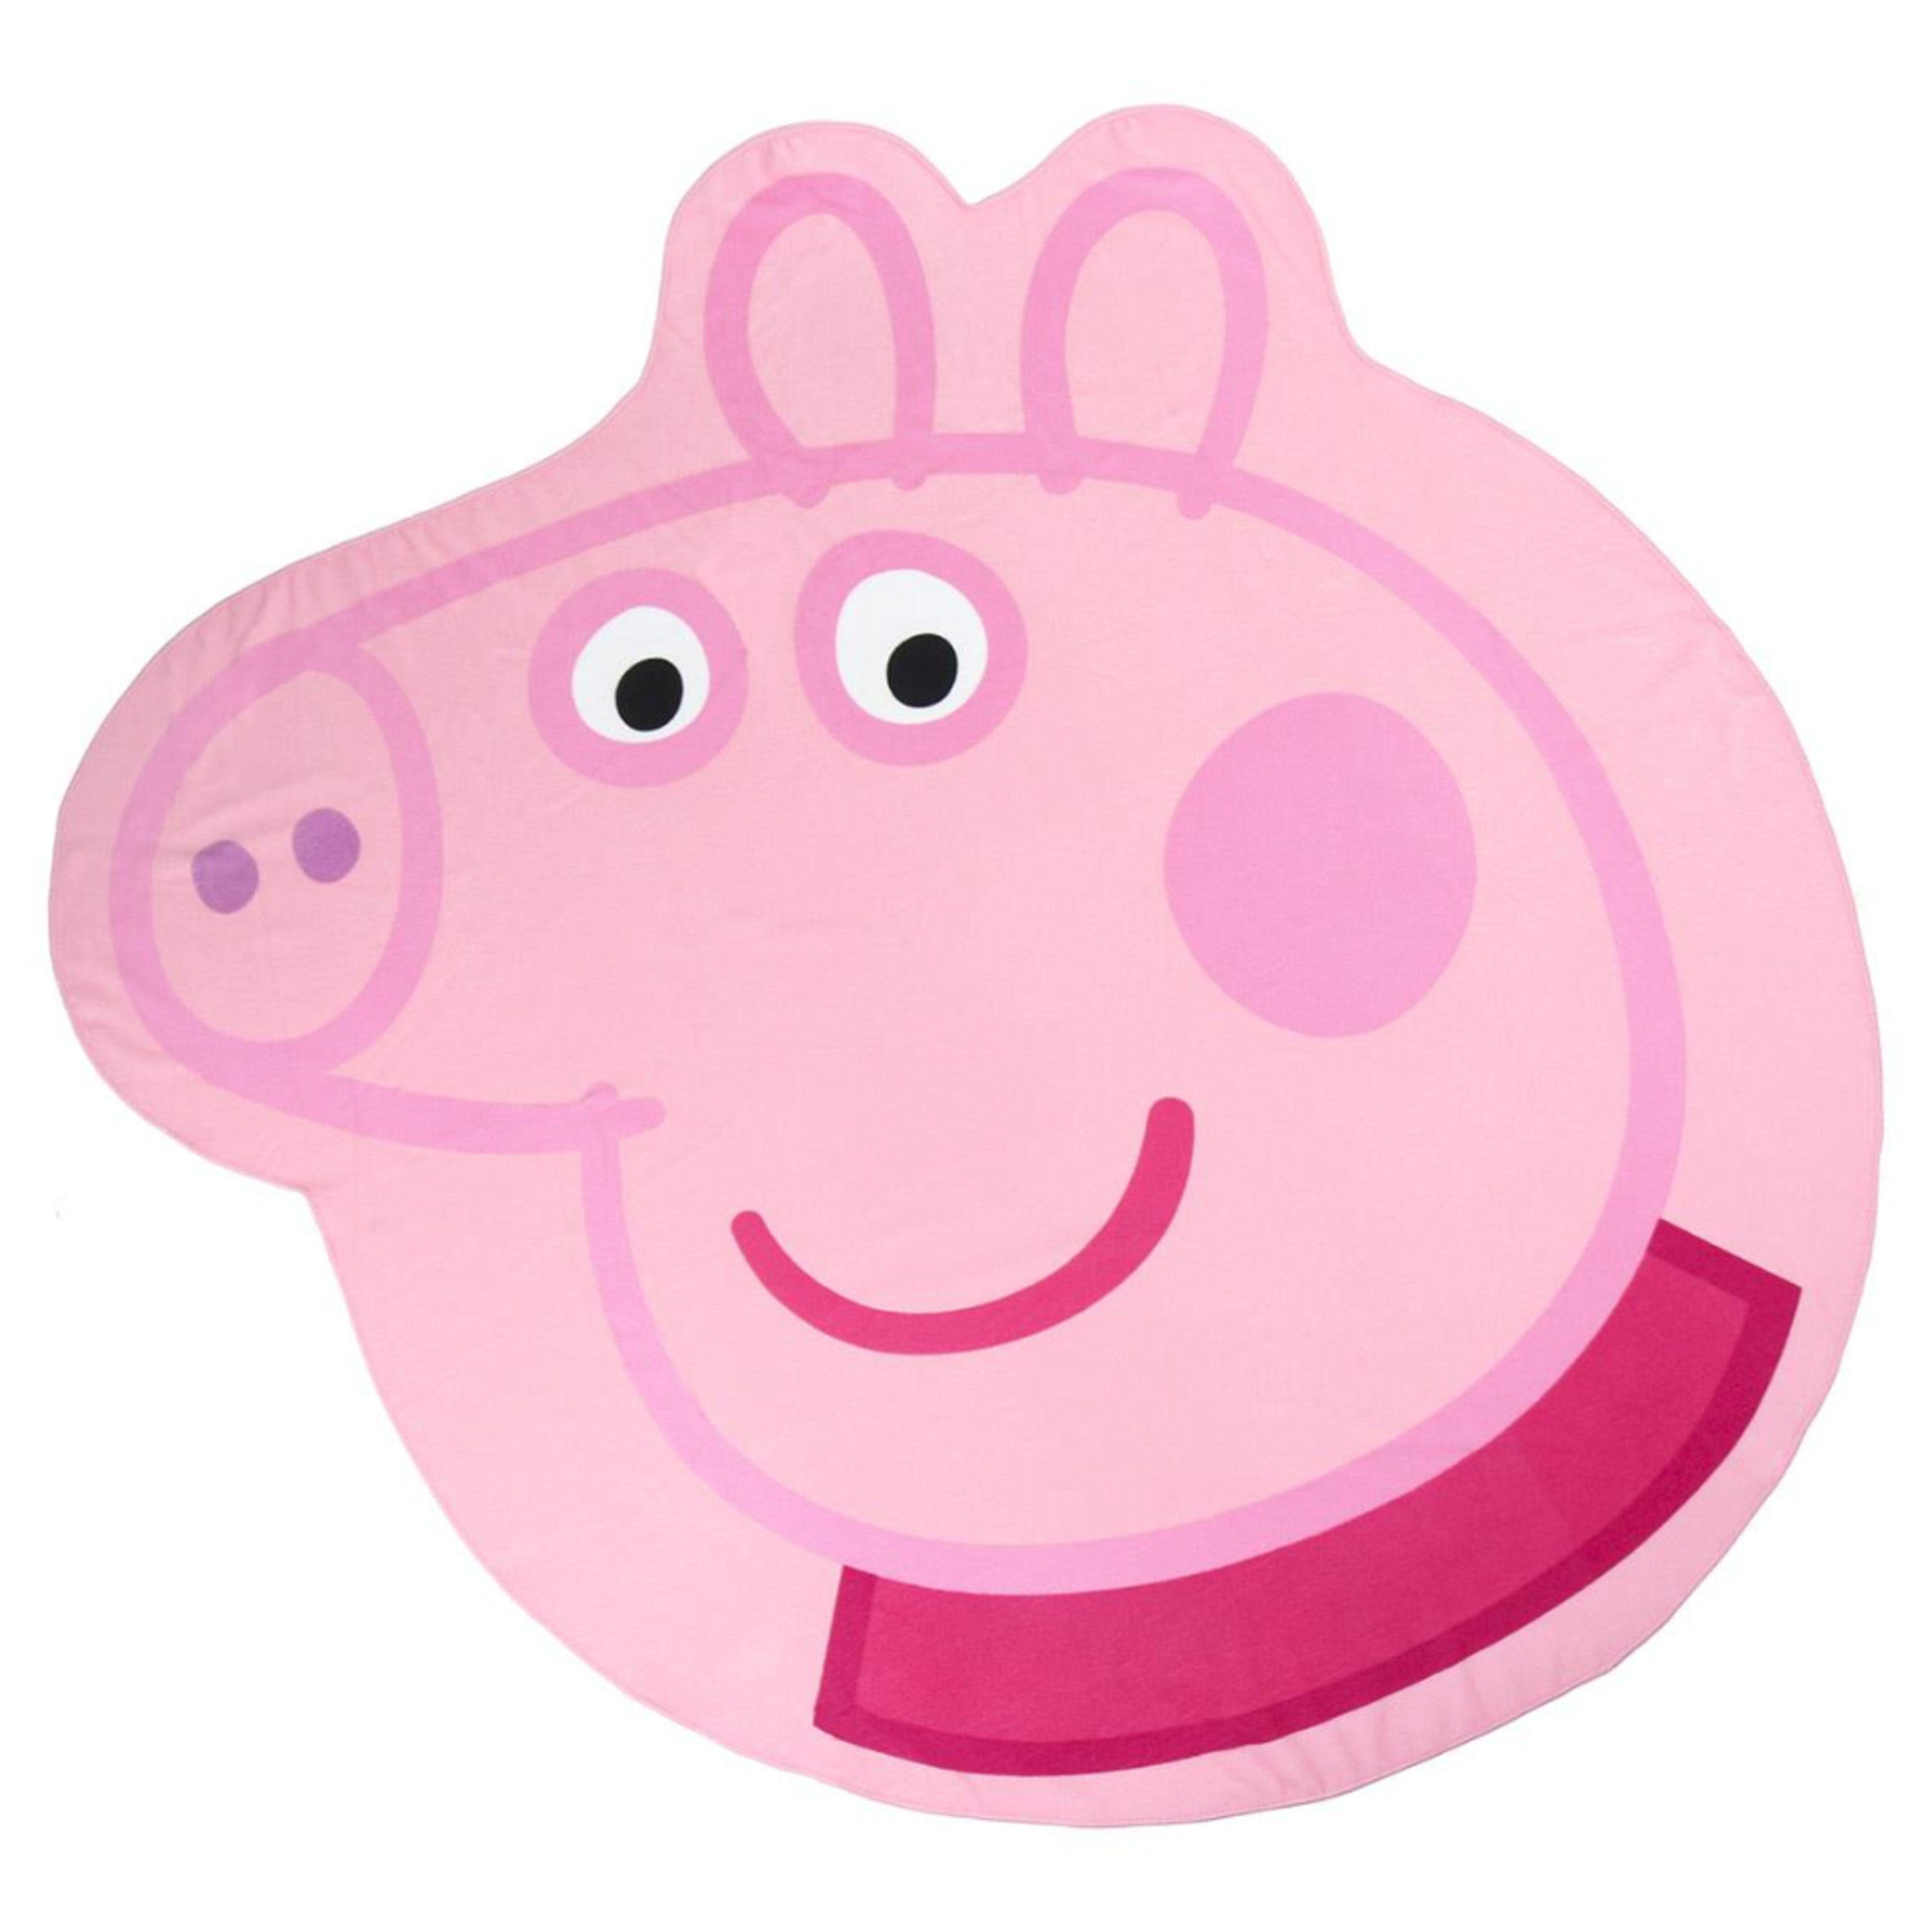 Toalla Peppa Pig 64307 - rosa - 